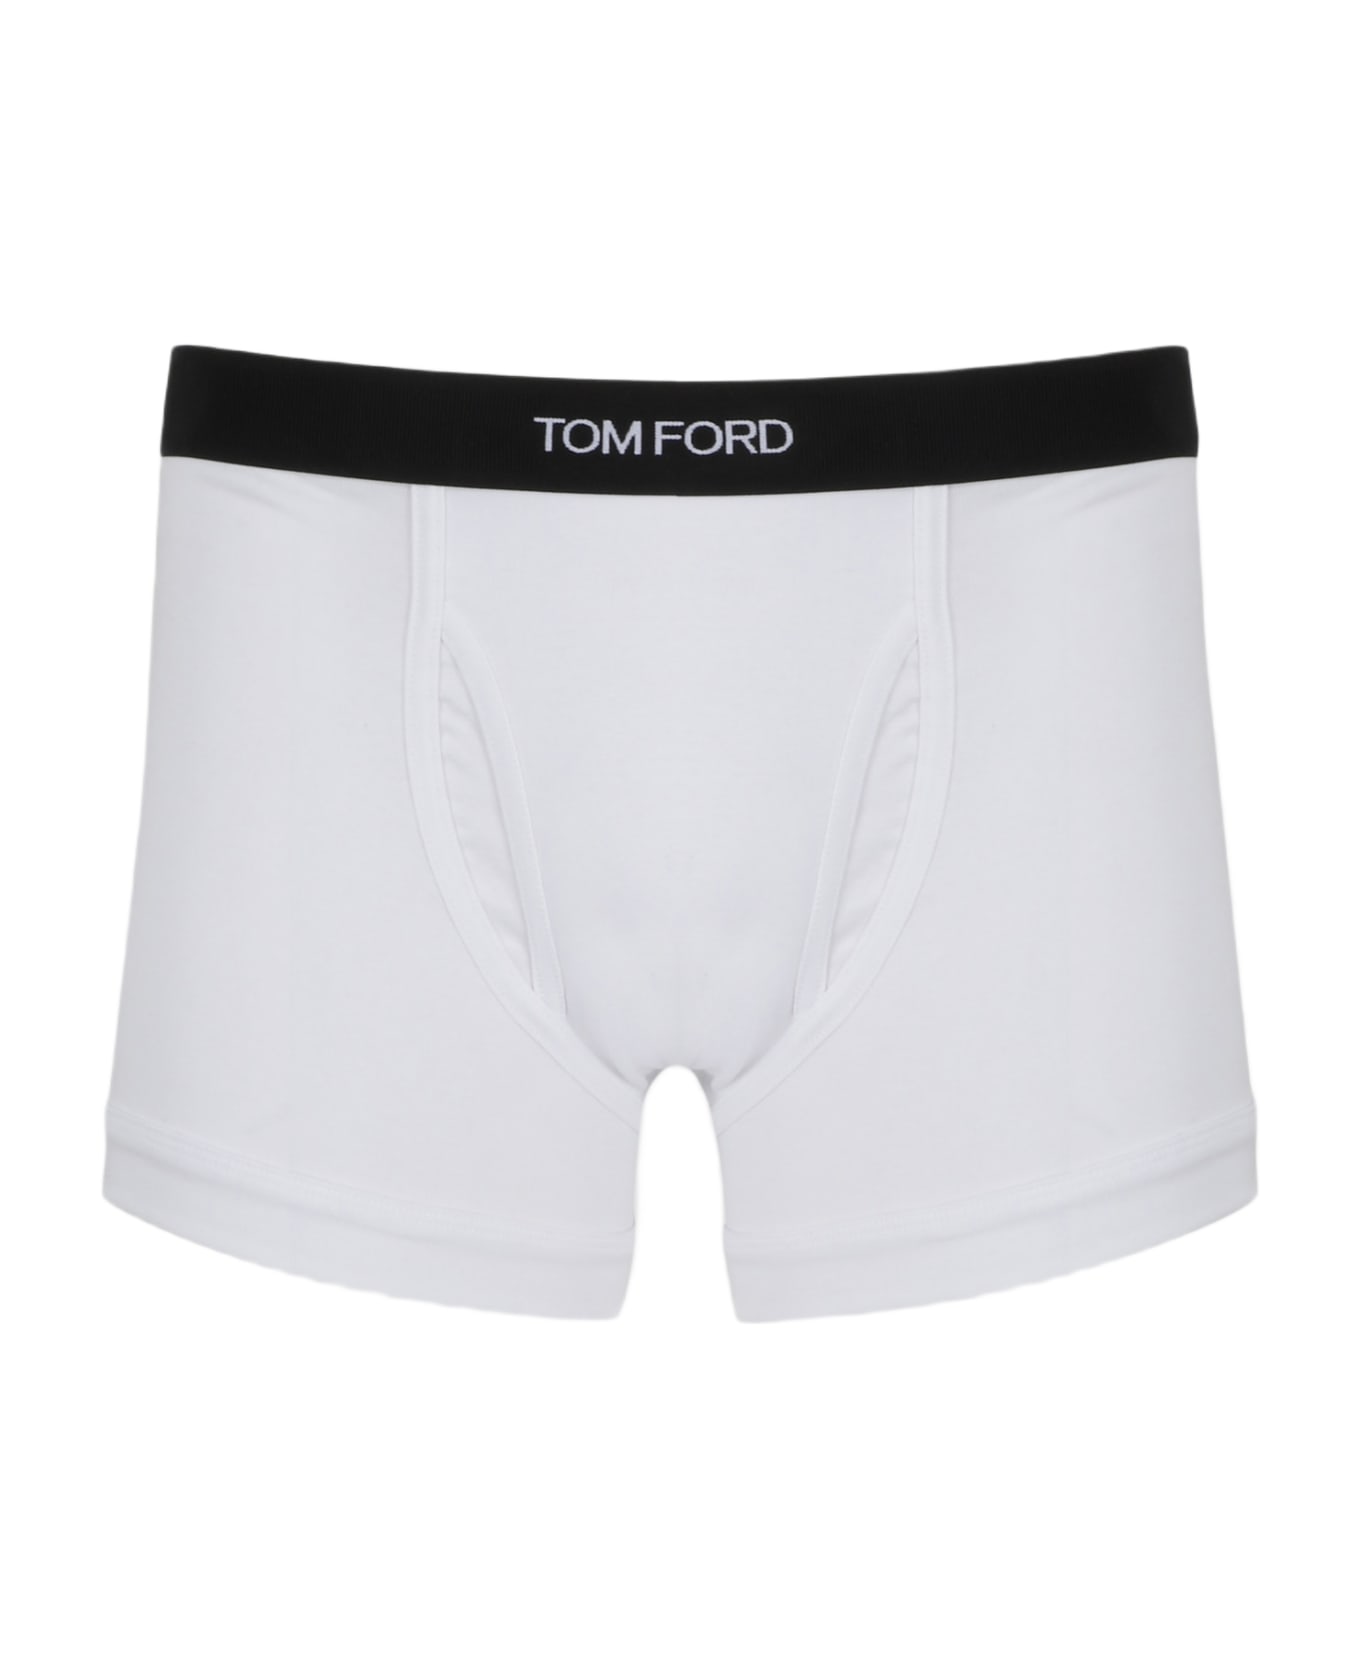 Tom Ford Cotton Boxer Briefs - White